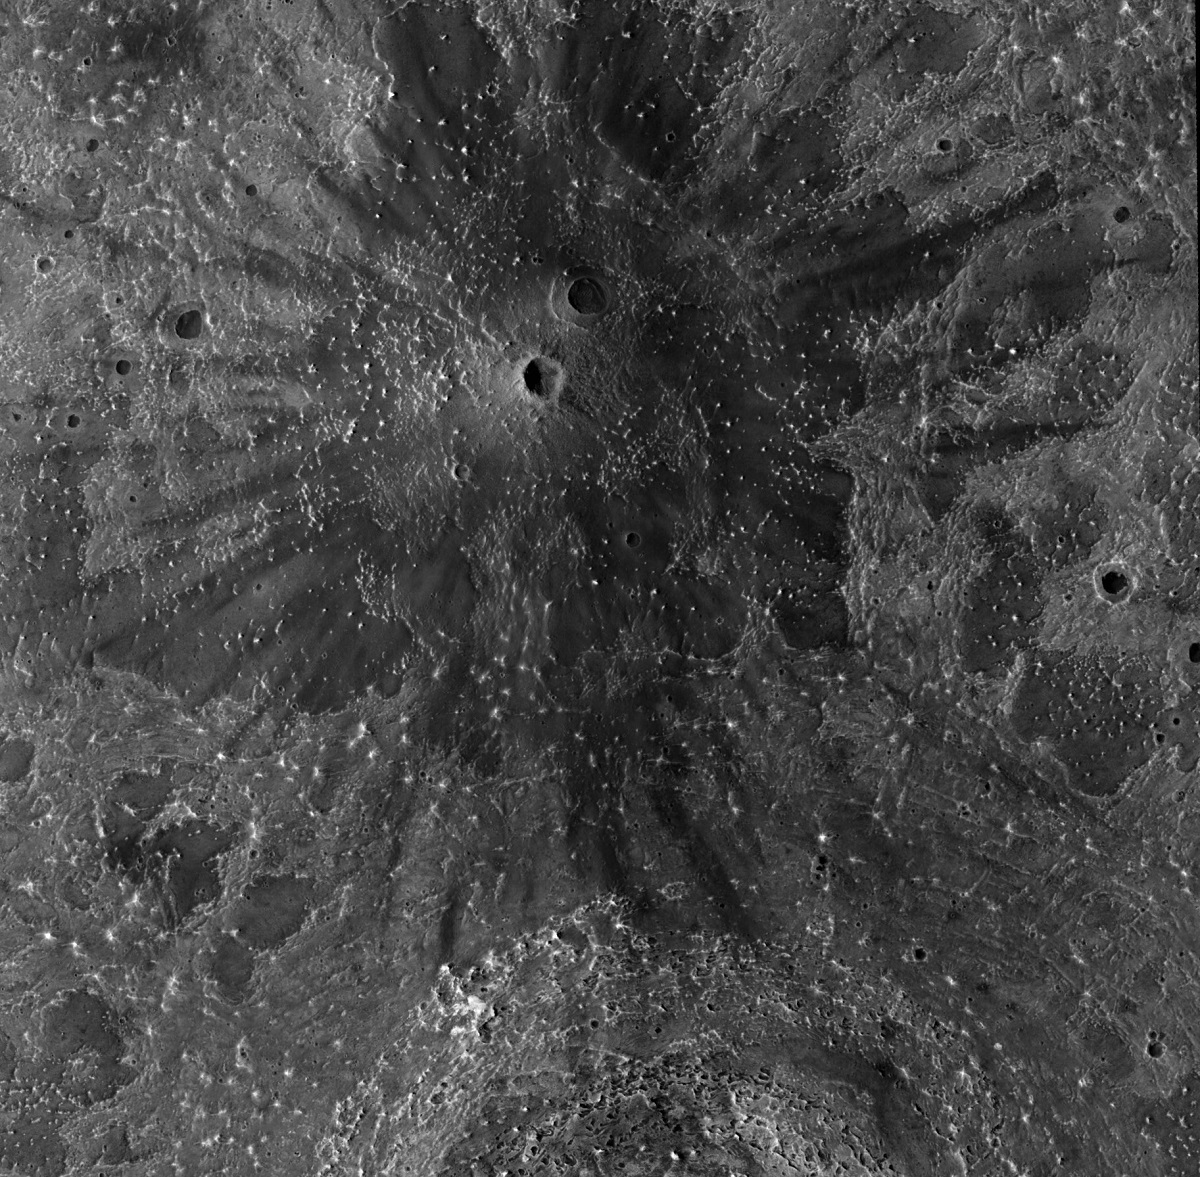 Distinctive Rayed Impact Crater in Meridiani Planum - HiRISE Image-ESP_020784_1810